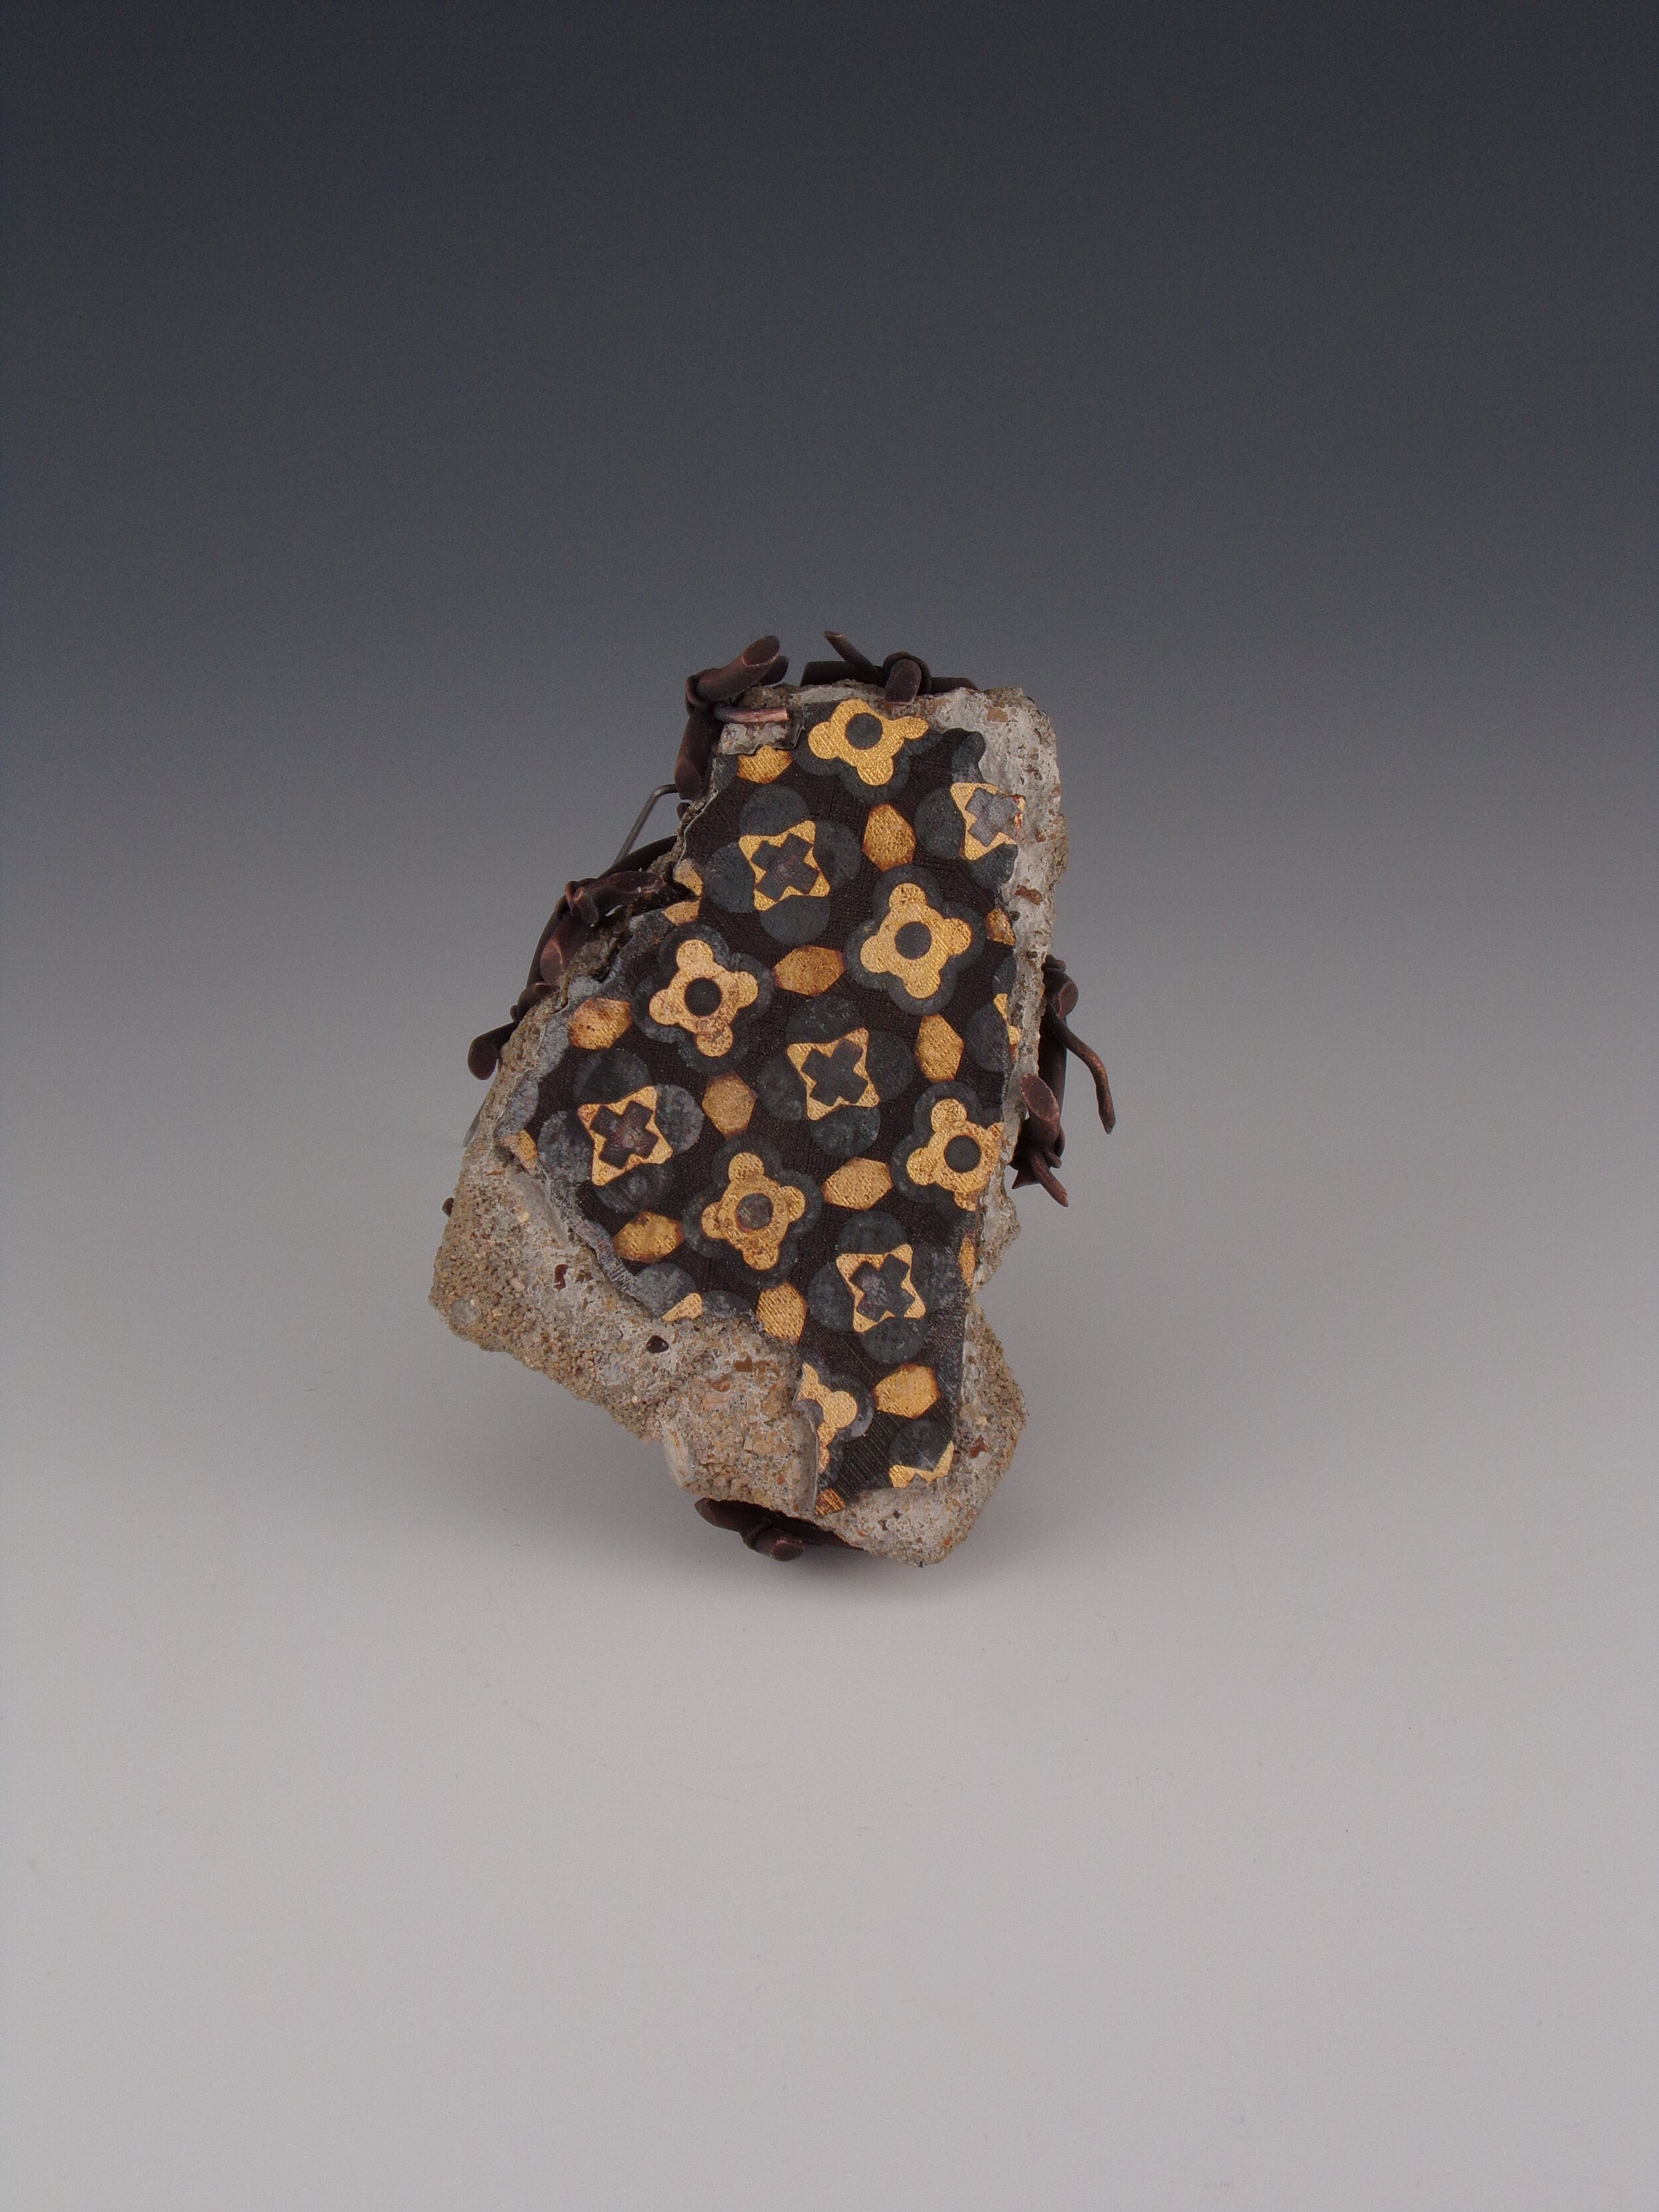 Fragments #2, 2.75” x 2” x .75”, steel, silver, gold (damascene), copper, cast cement, 2018